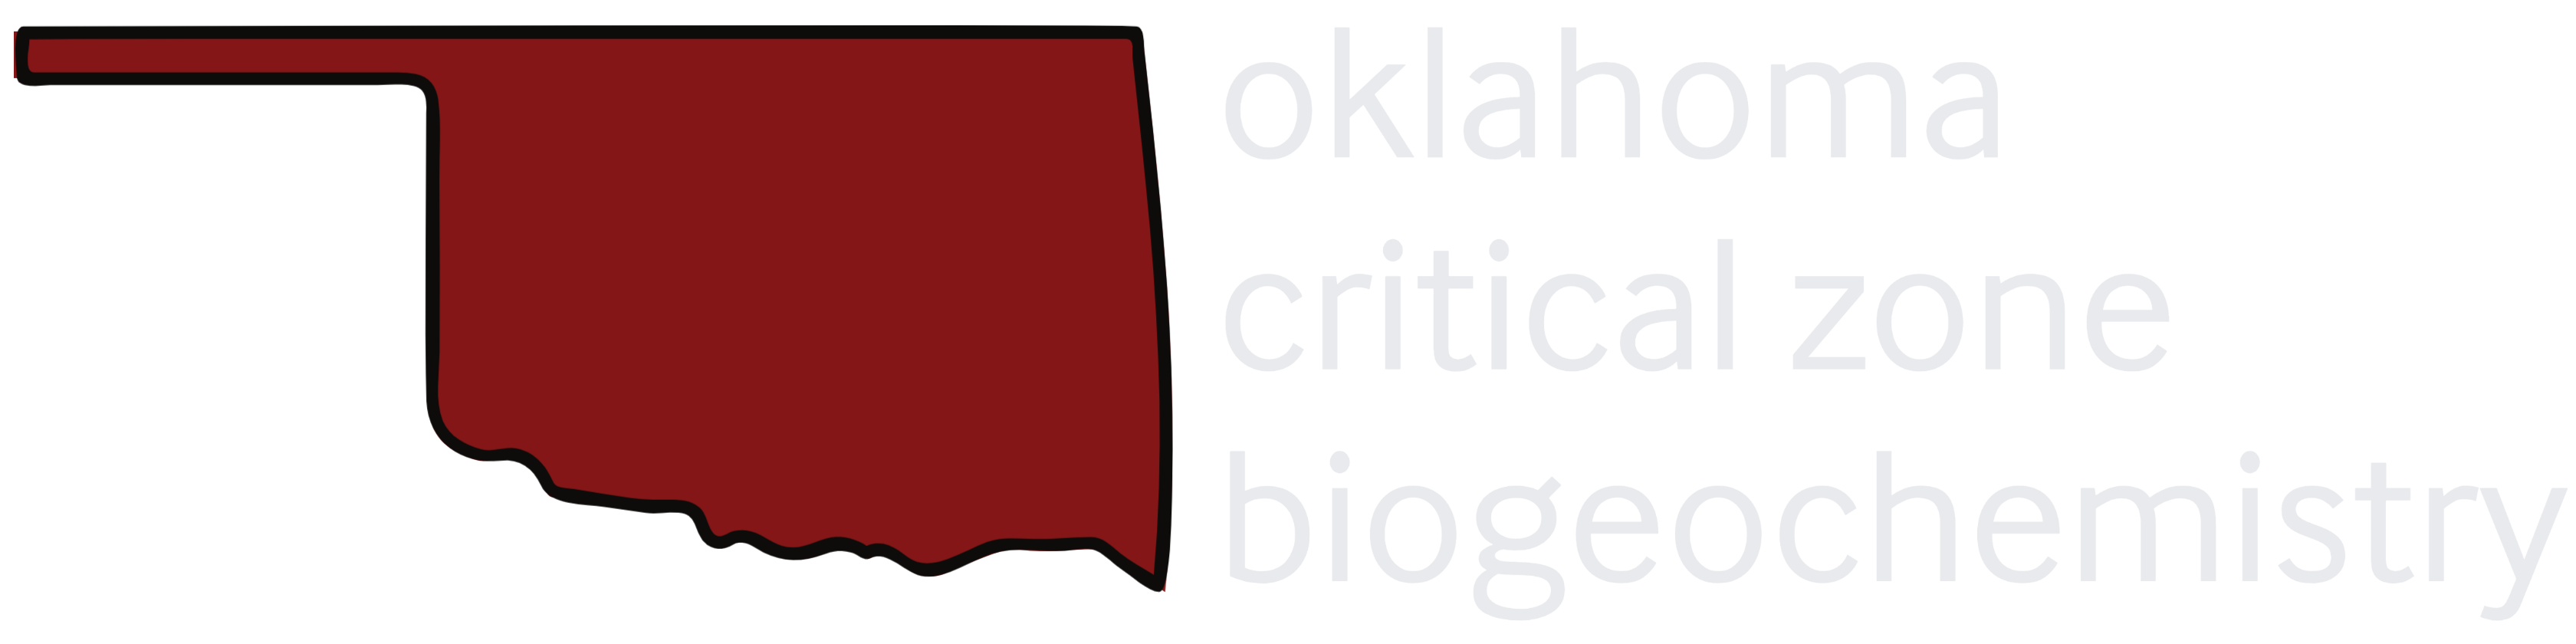 University of Oklahoma Critical Zone Biogeochemistry